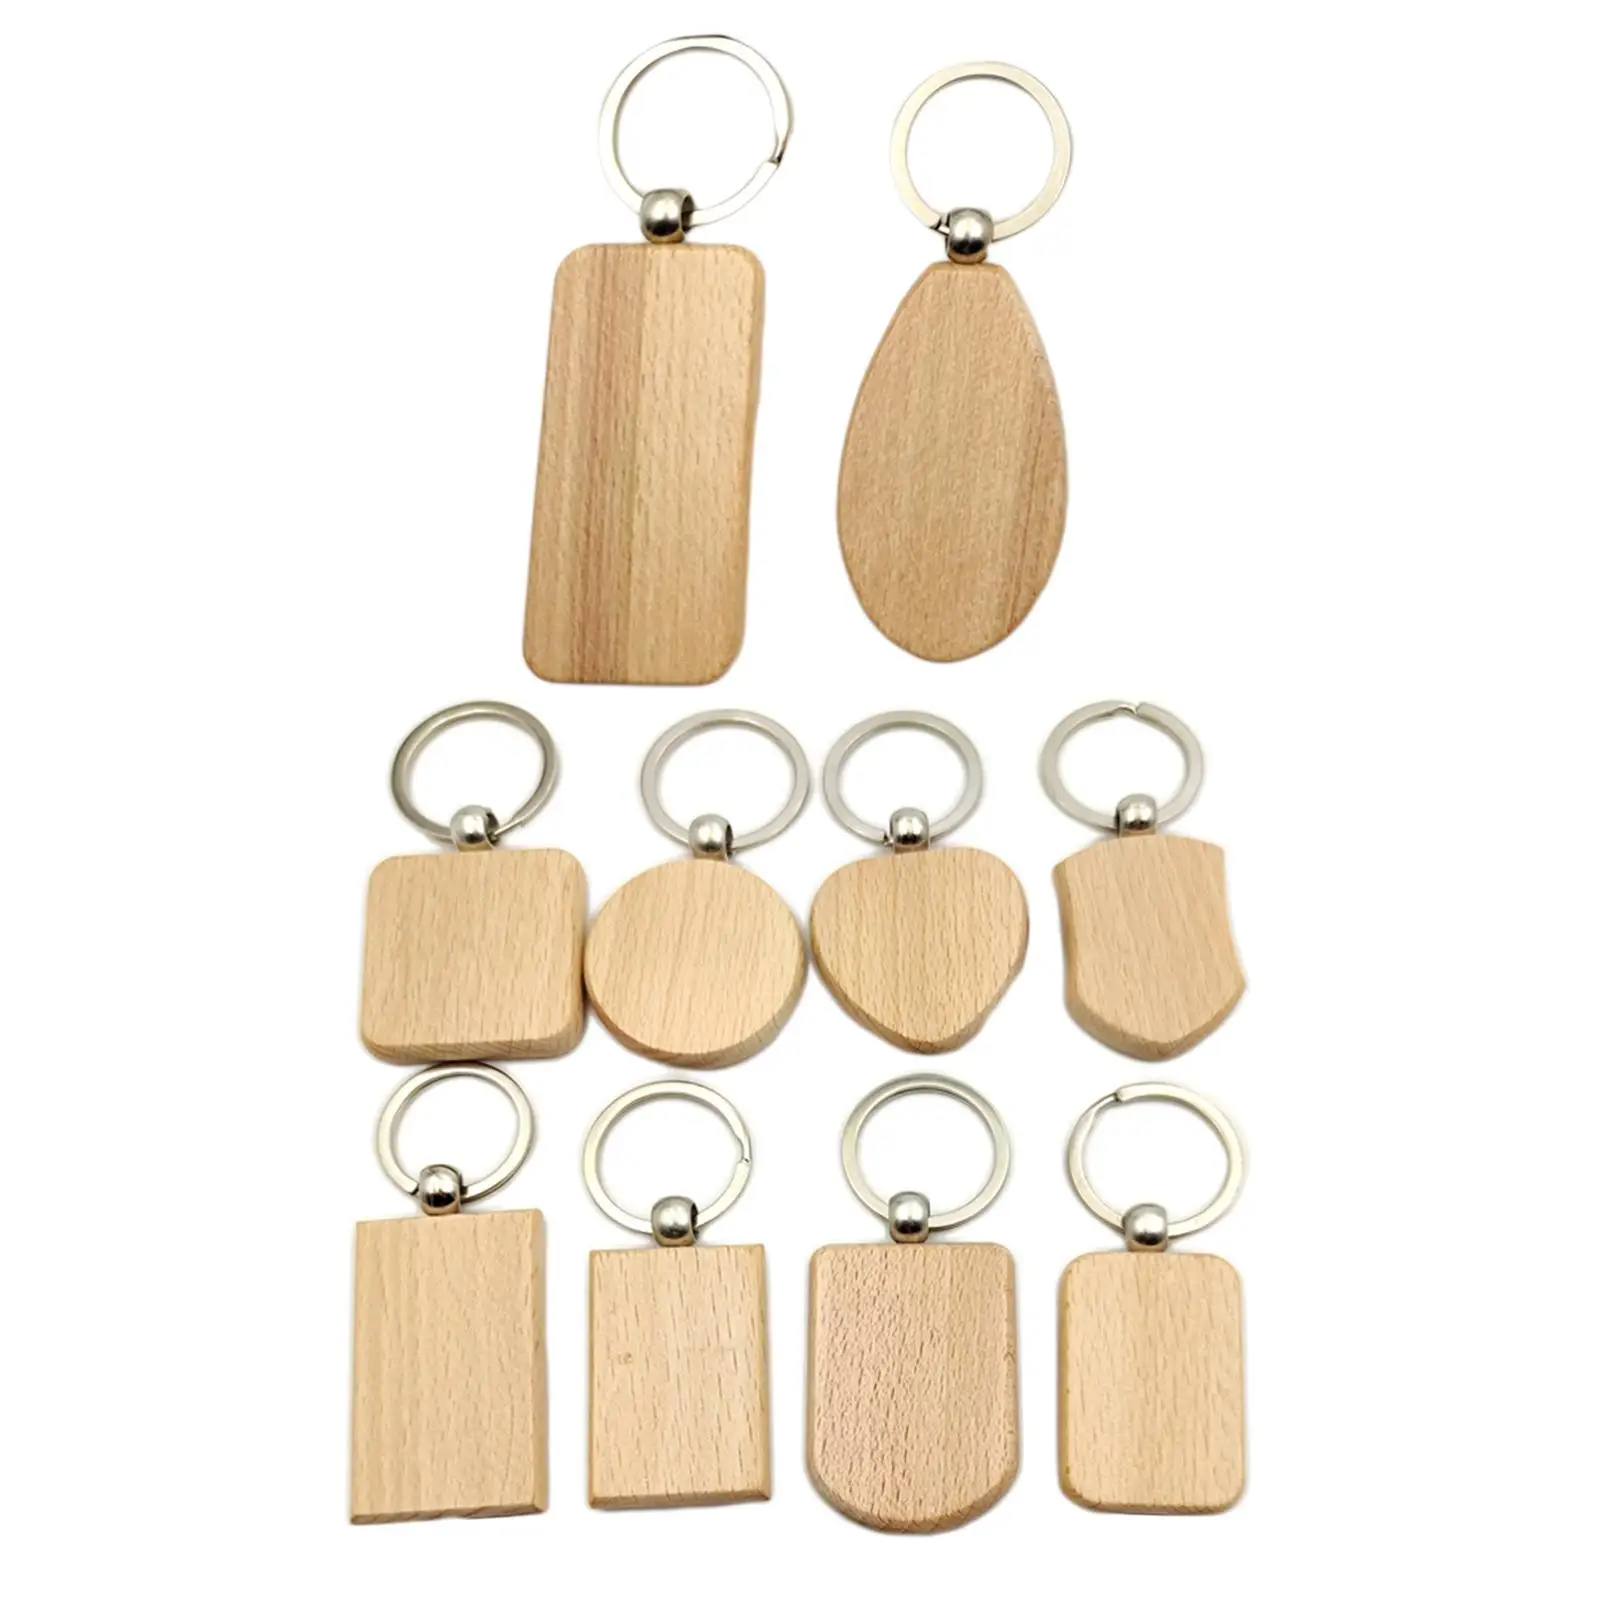 10x Blank Key Chain Keychain Keyring Handmade Bag Engraving Crafts Painting